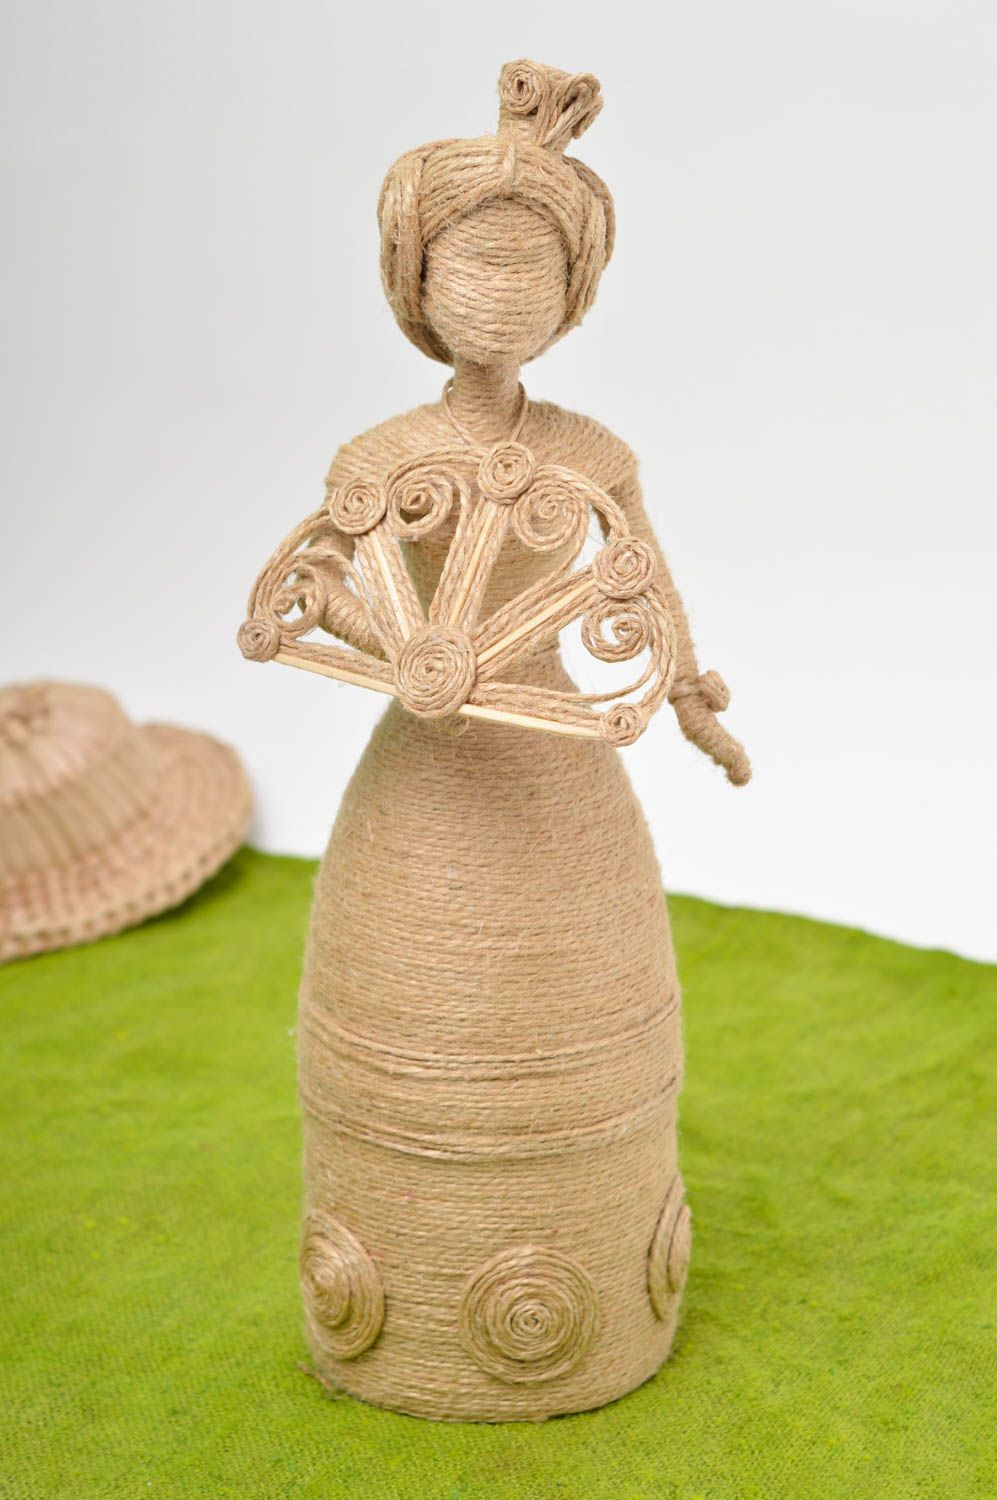 Handmade figurine designer statuette gift ideas decorative use only unusual gift photo 1